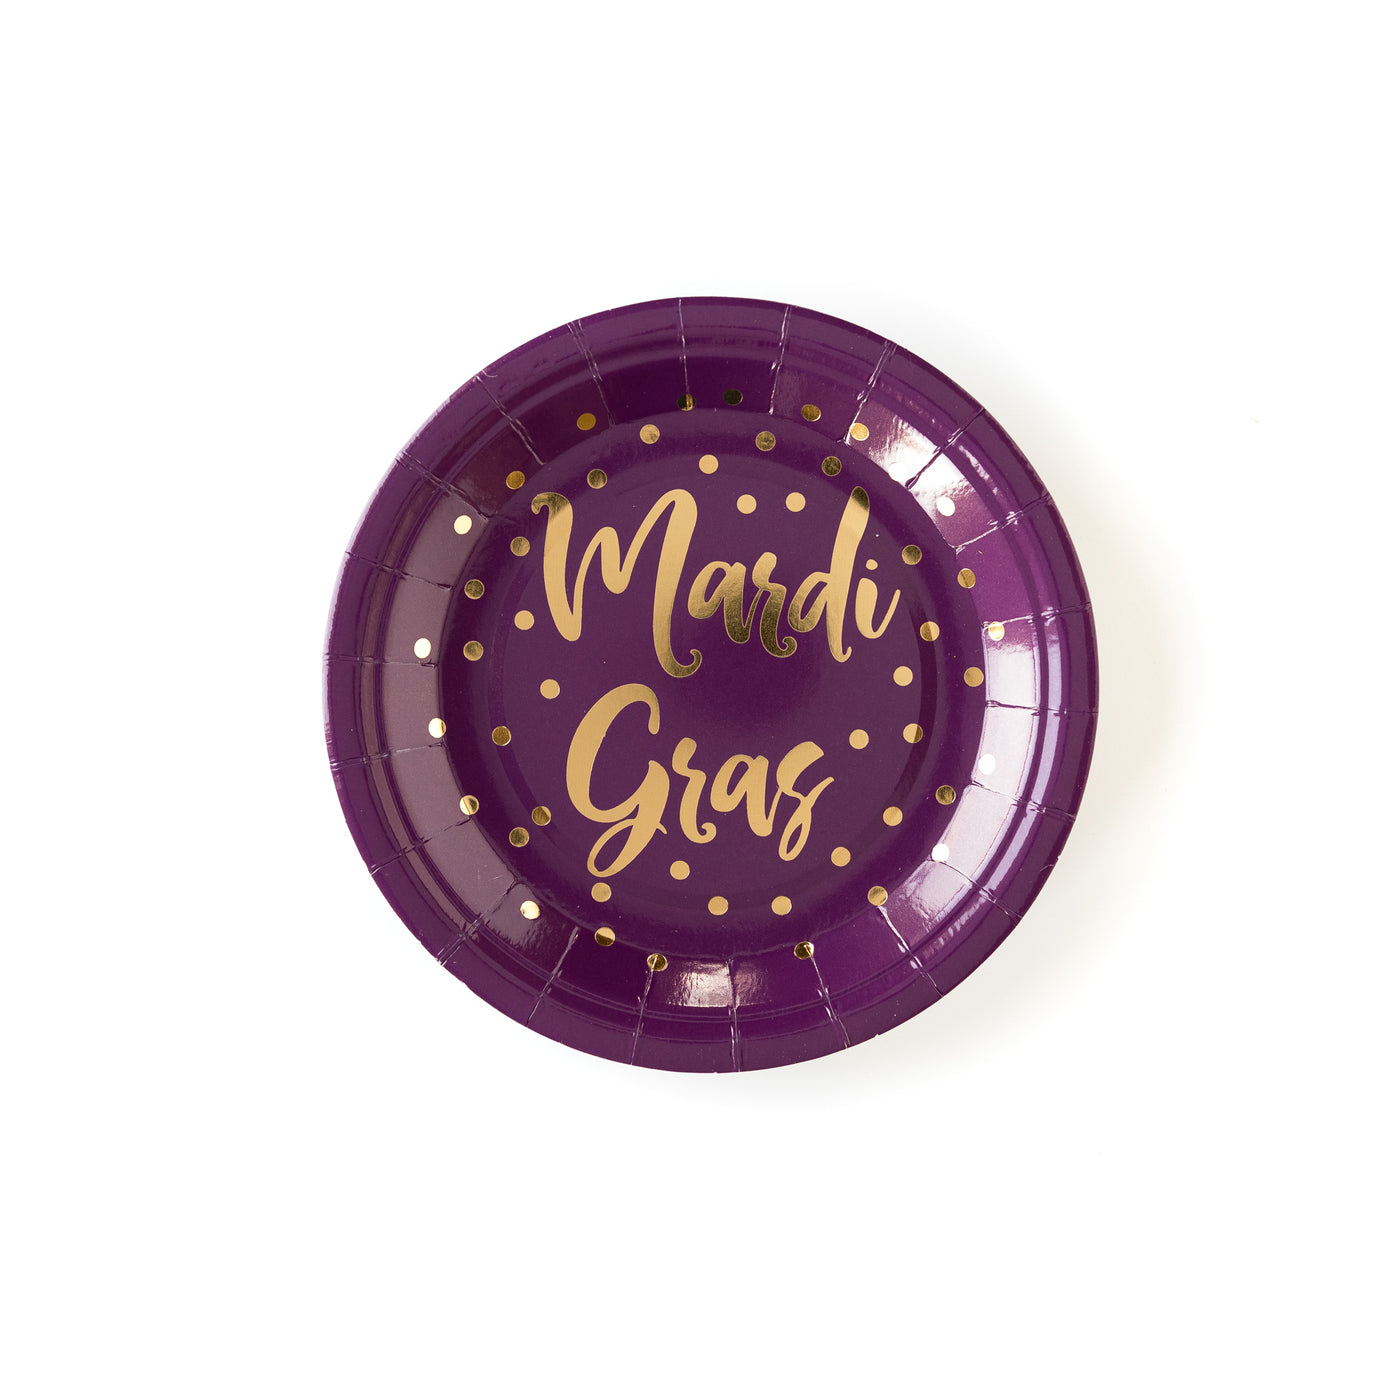 MGP141 - Mardi Gras 7" Plates